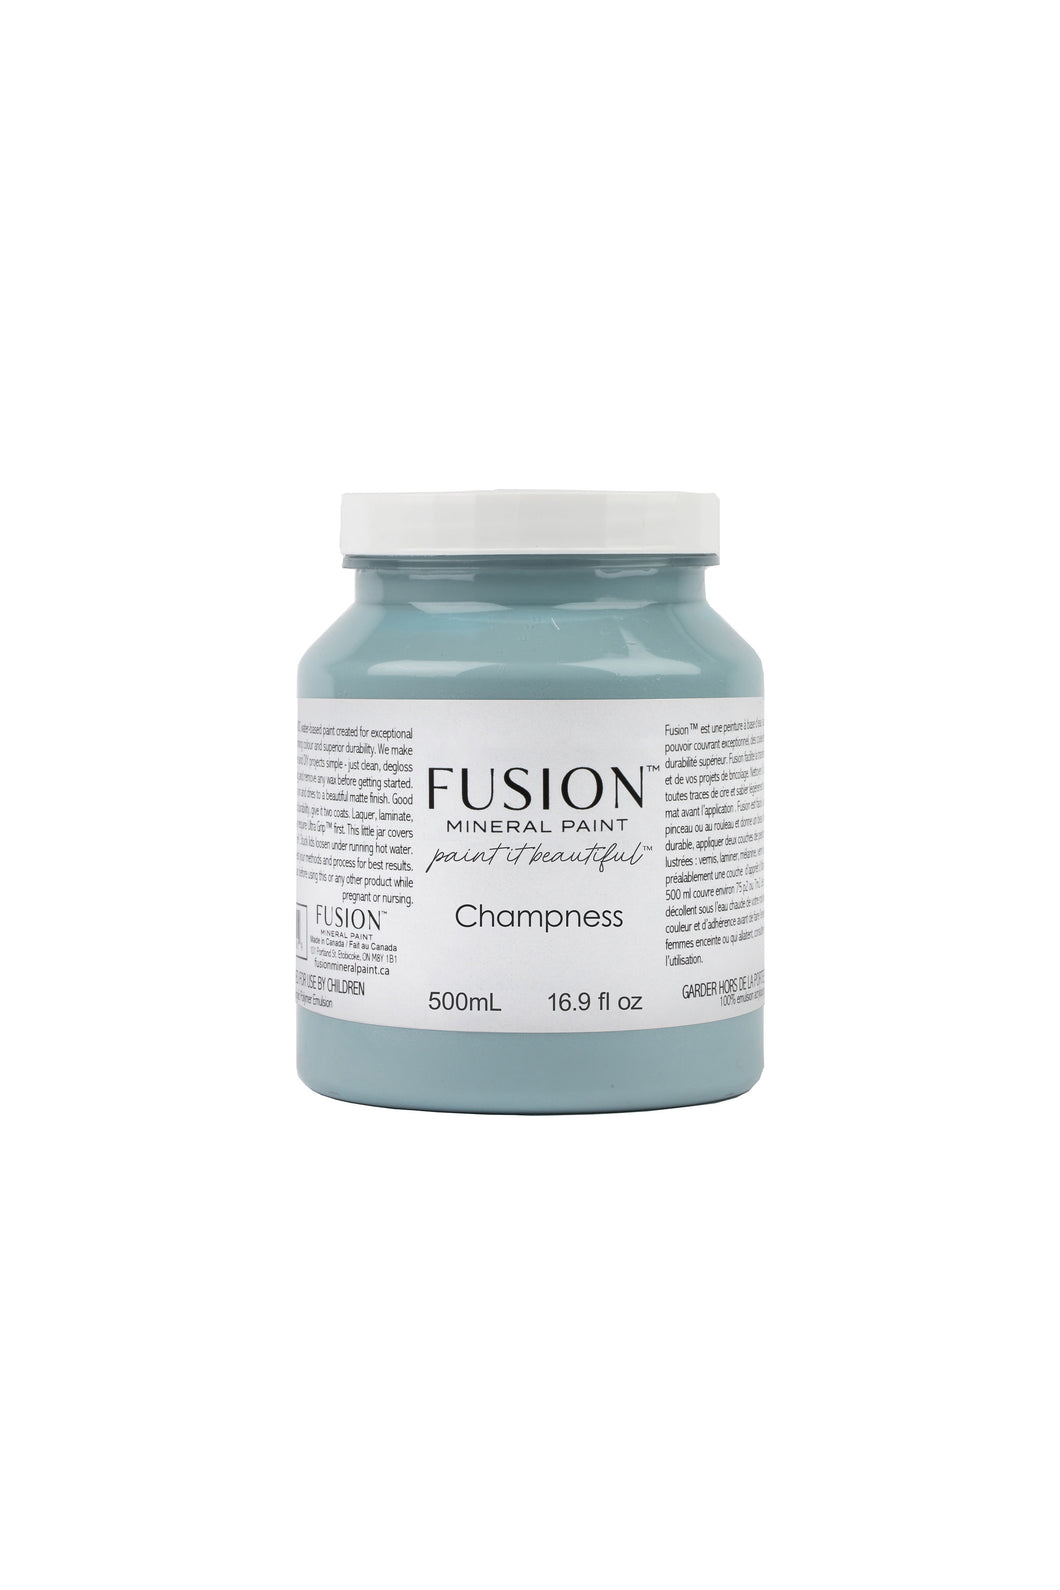 Fusion Mineral Paint - Champness 500 ml Jar